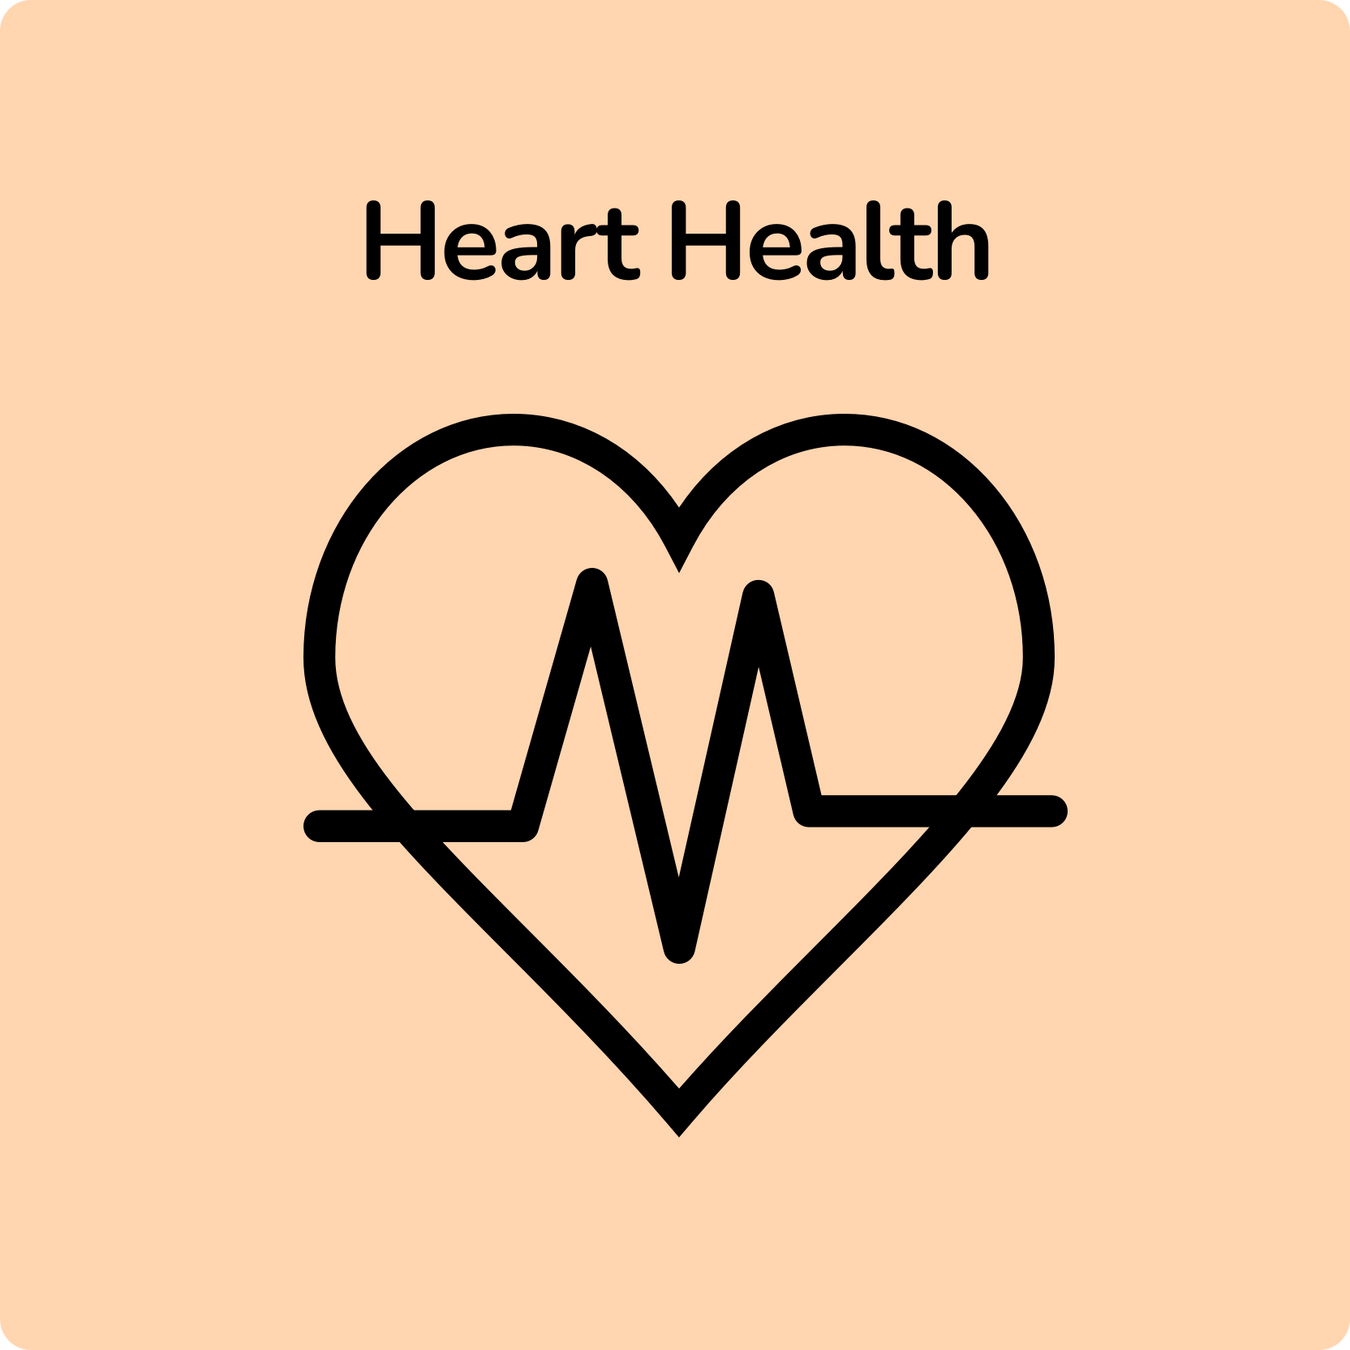 Heart Health and Circulation